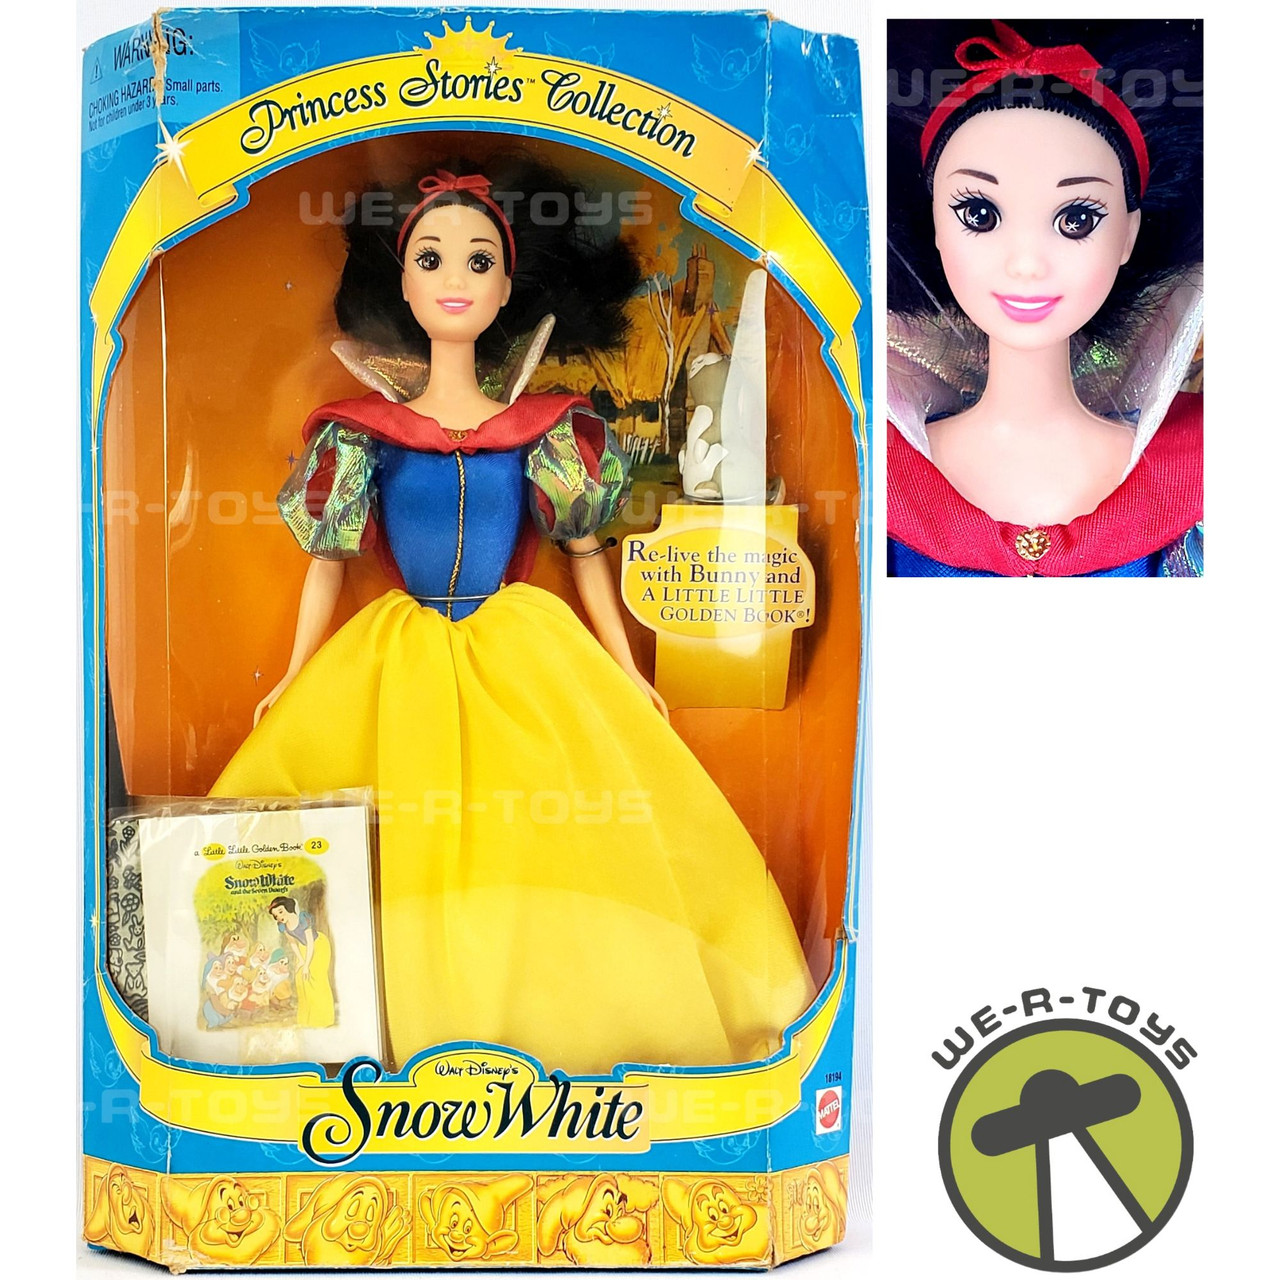 Disney Princess Stories Collection バービー - www.hondaprokevin.com